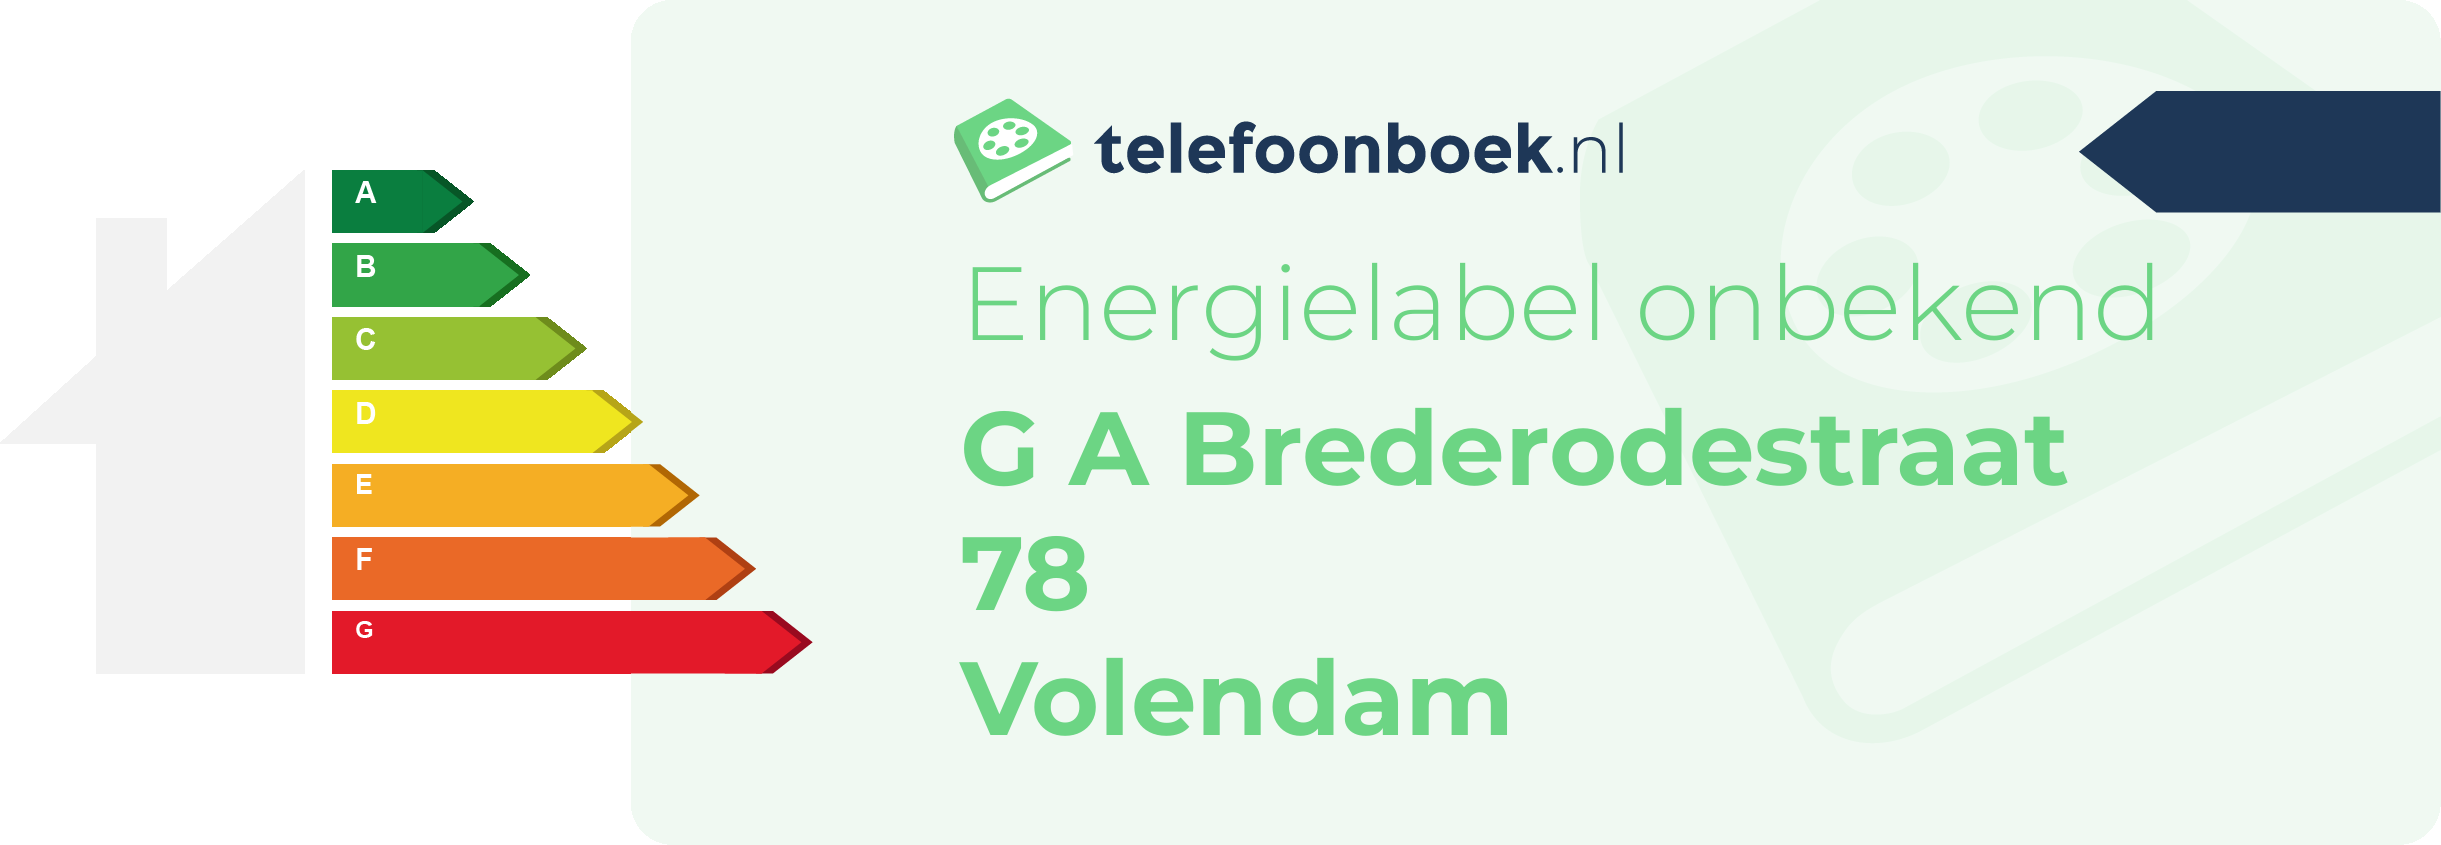 Energielabel G A Brederodestraat 78 Volendam